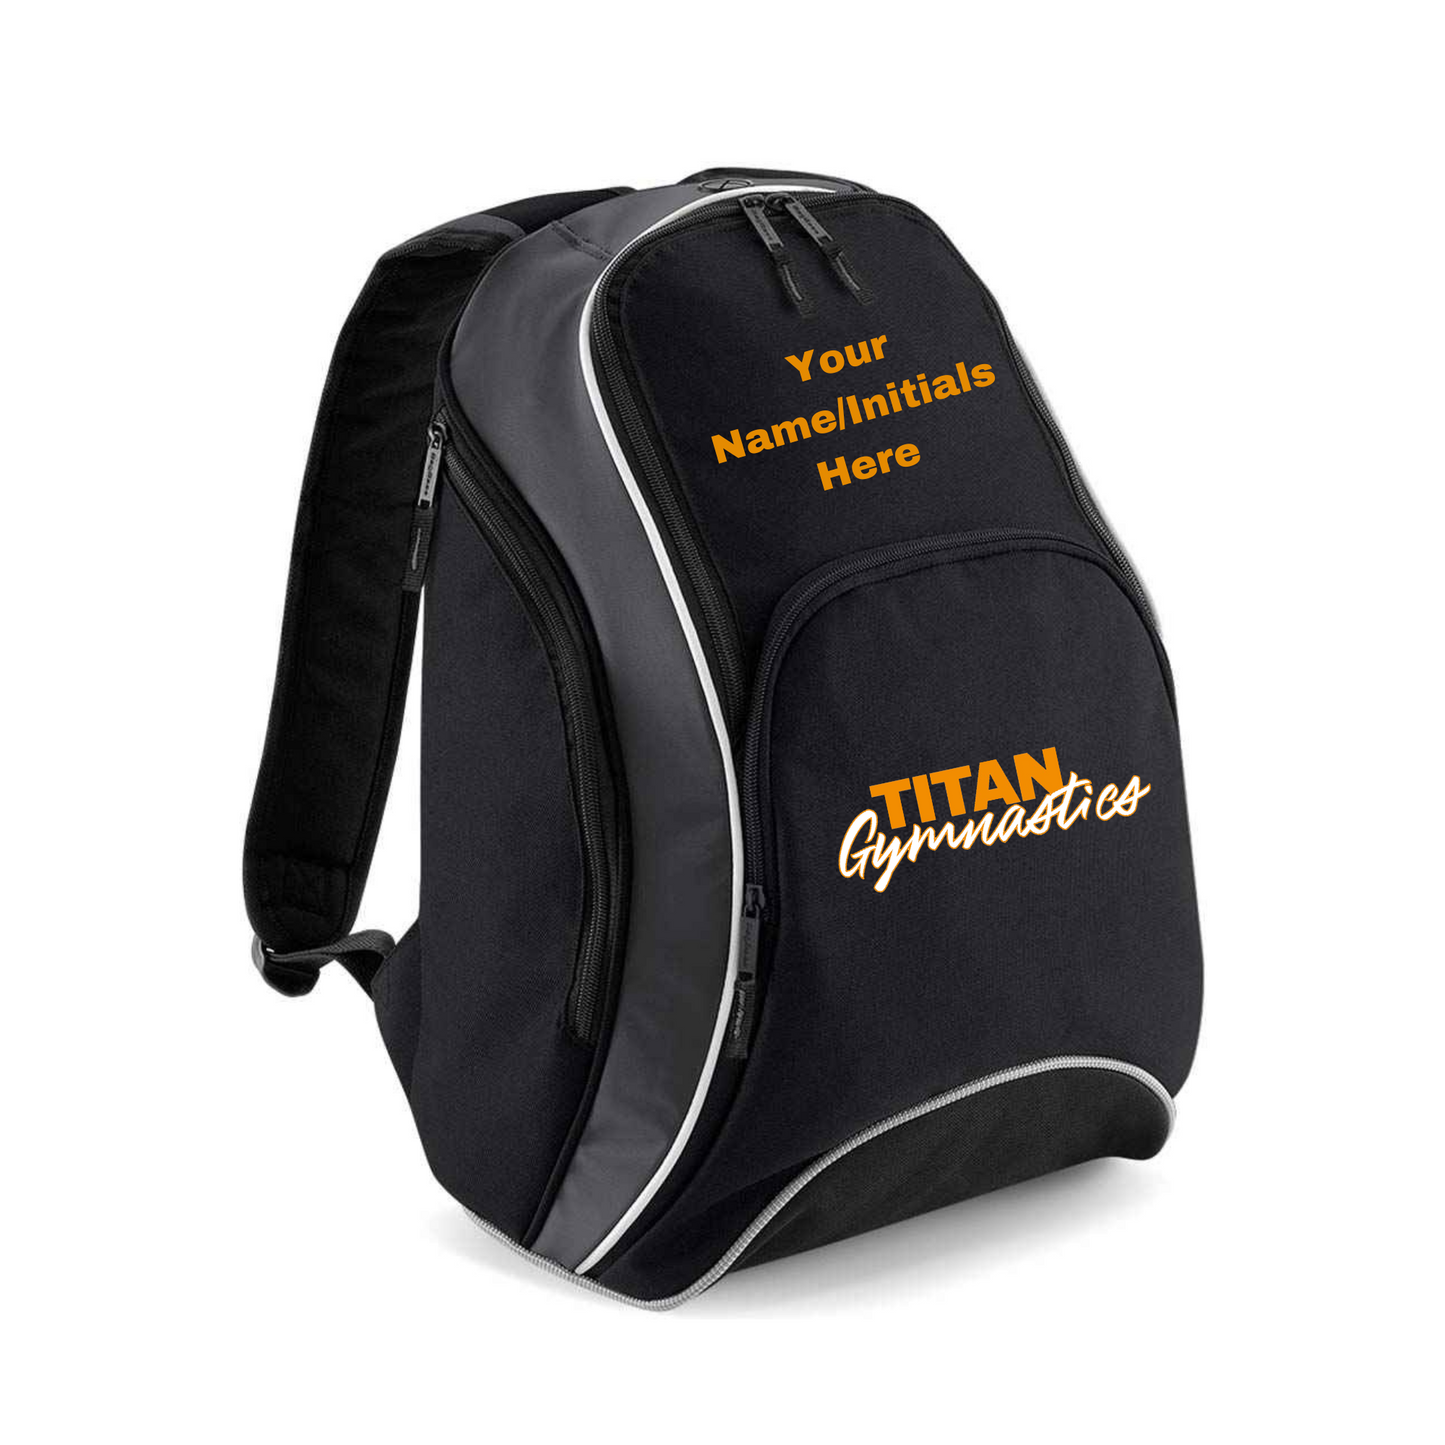 Titan Team Wear Tracksuit and Bag Bundle LV871/881-BG571